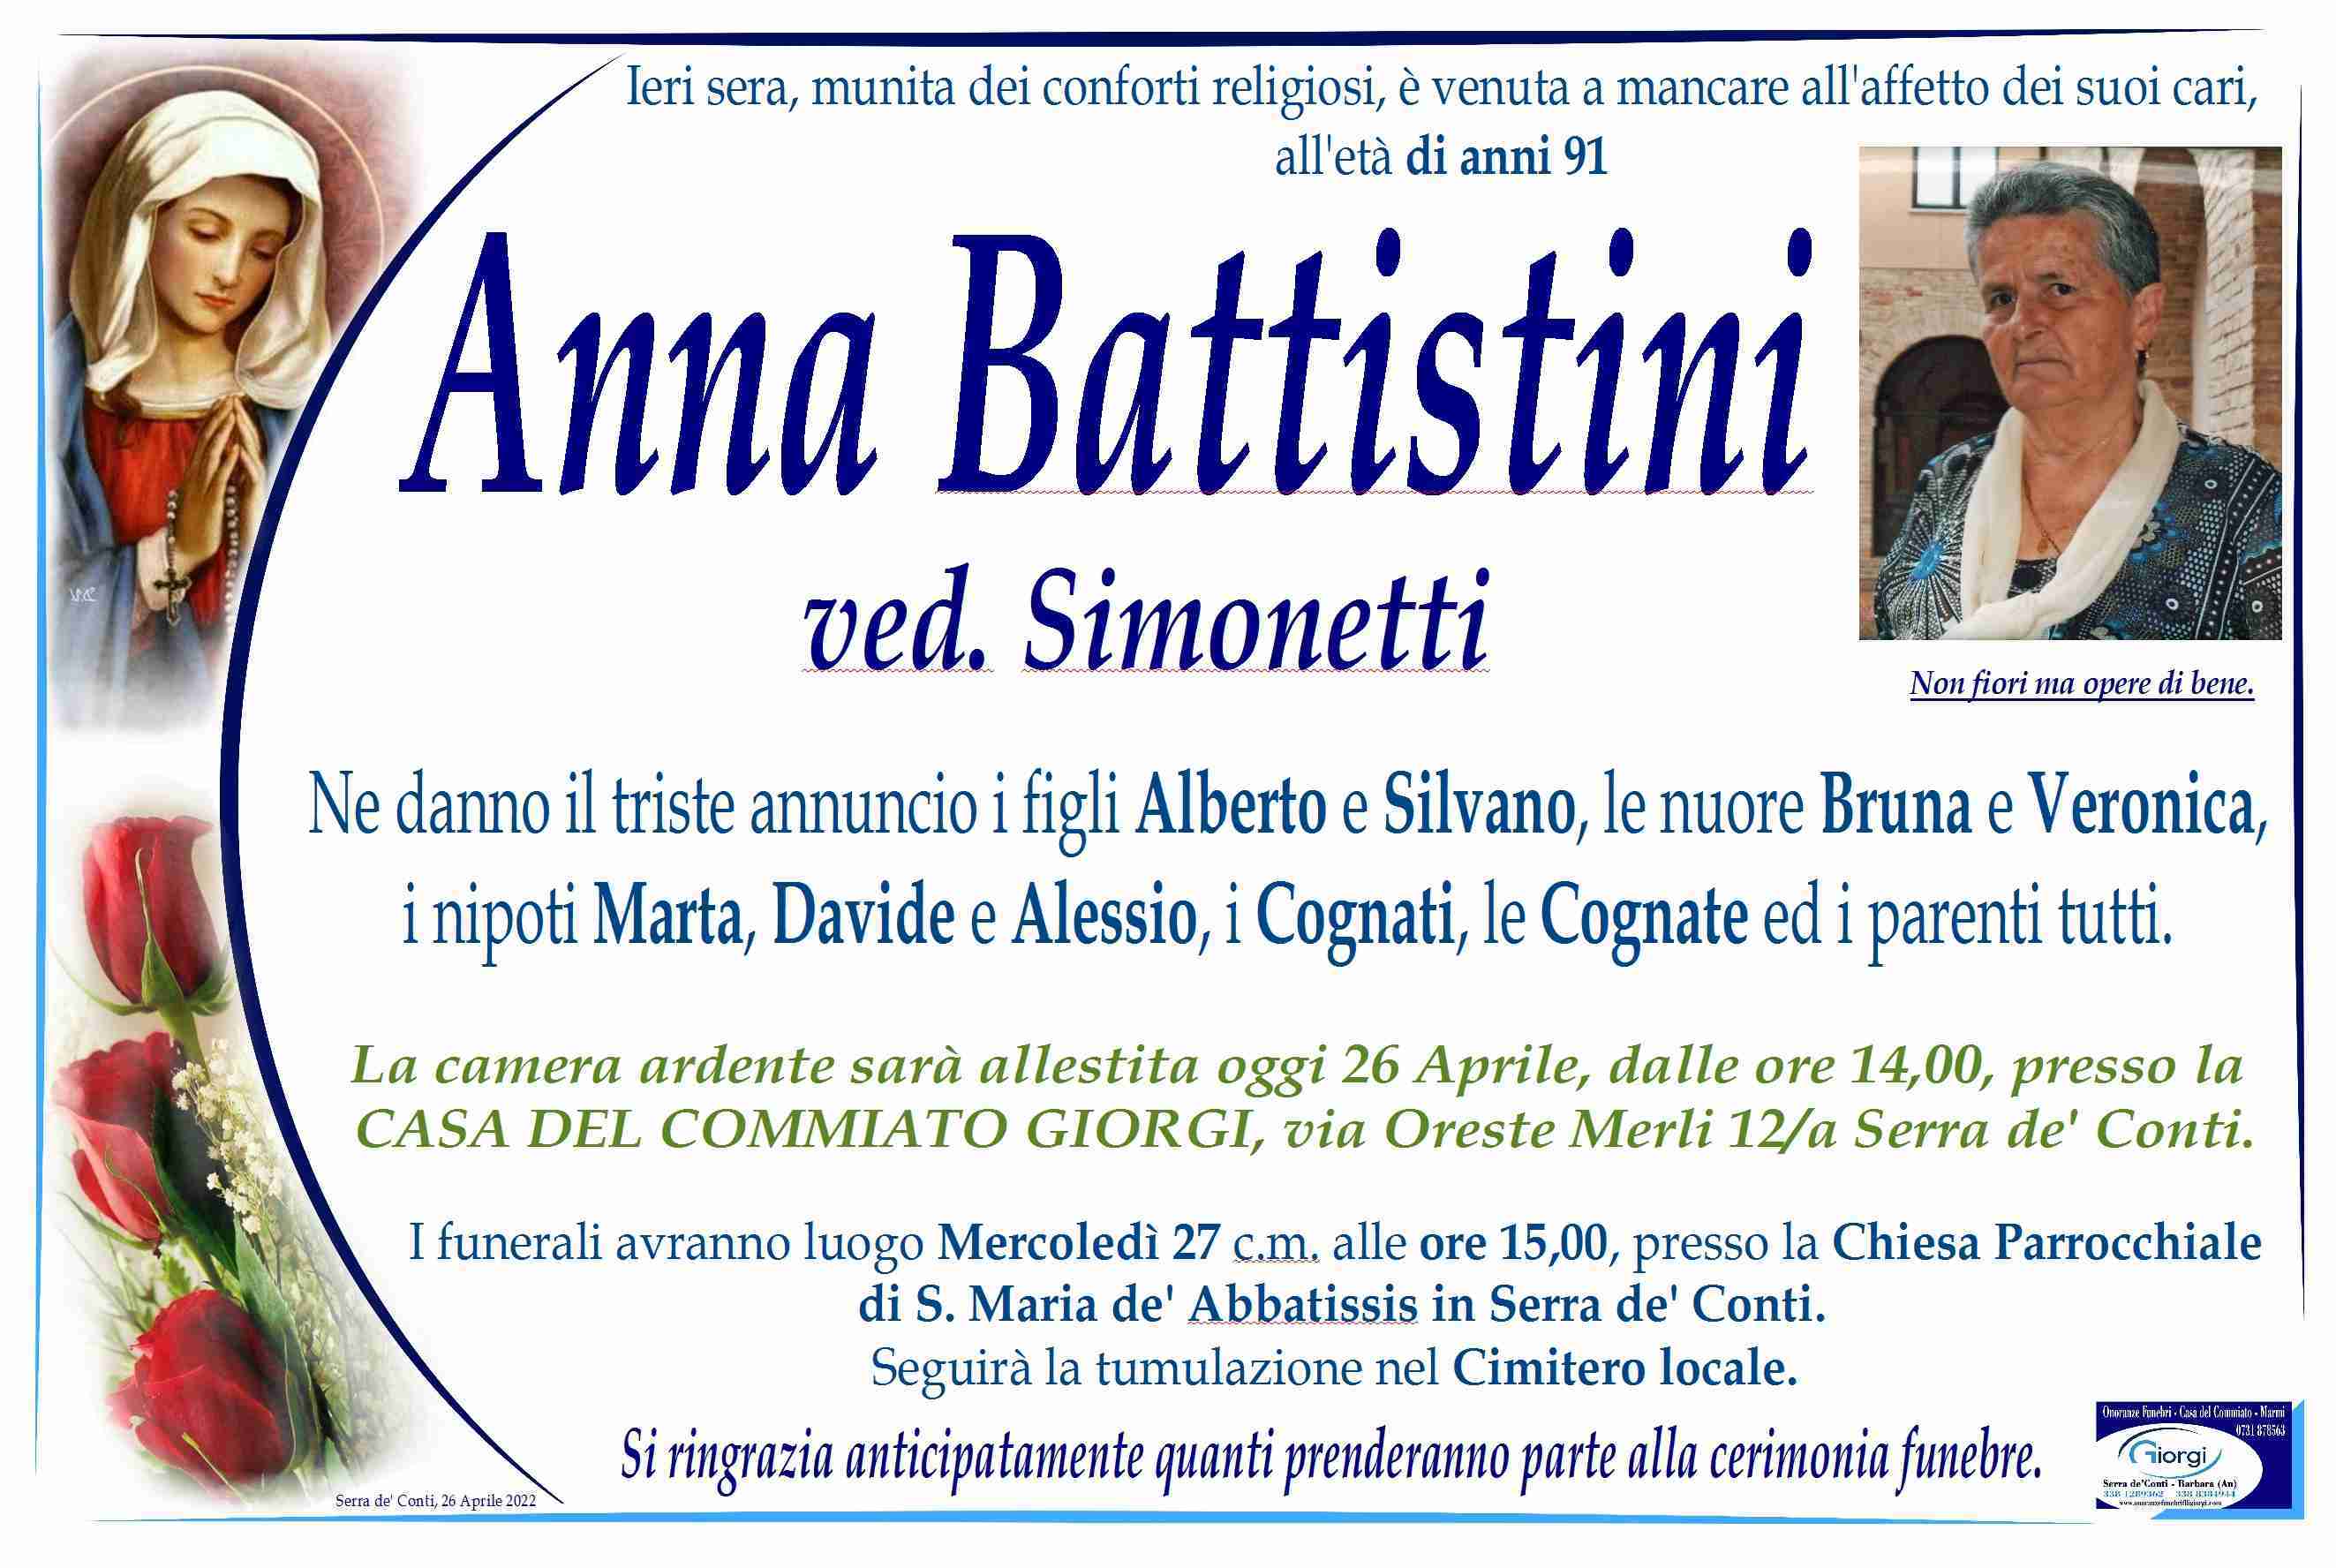 Anna Battistini